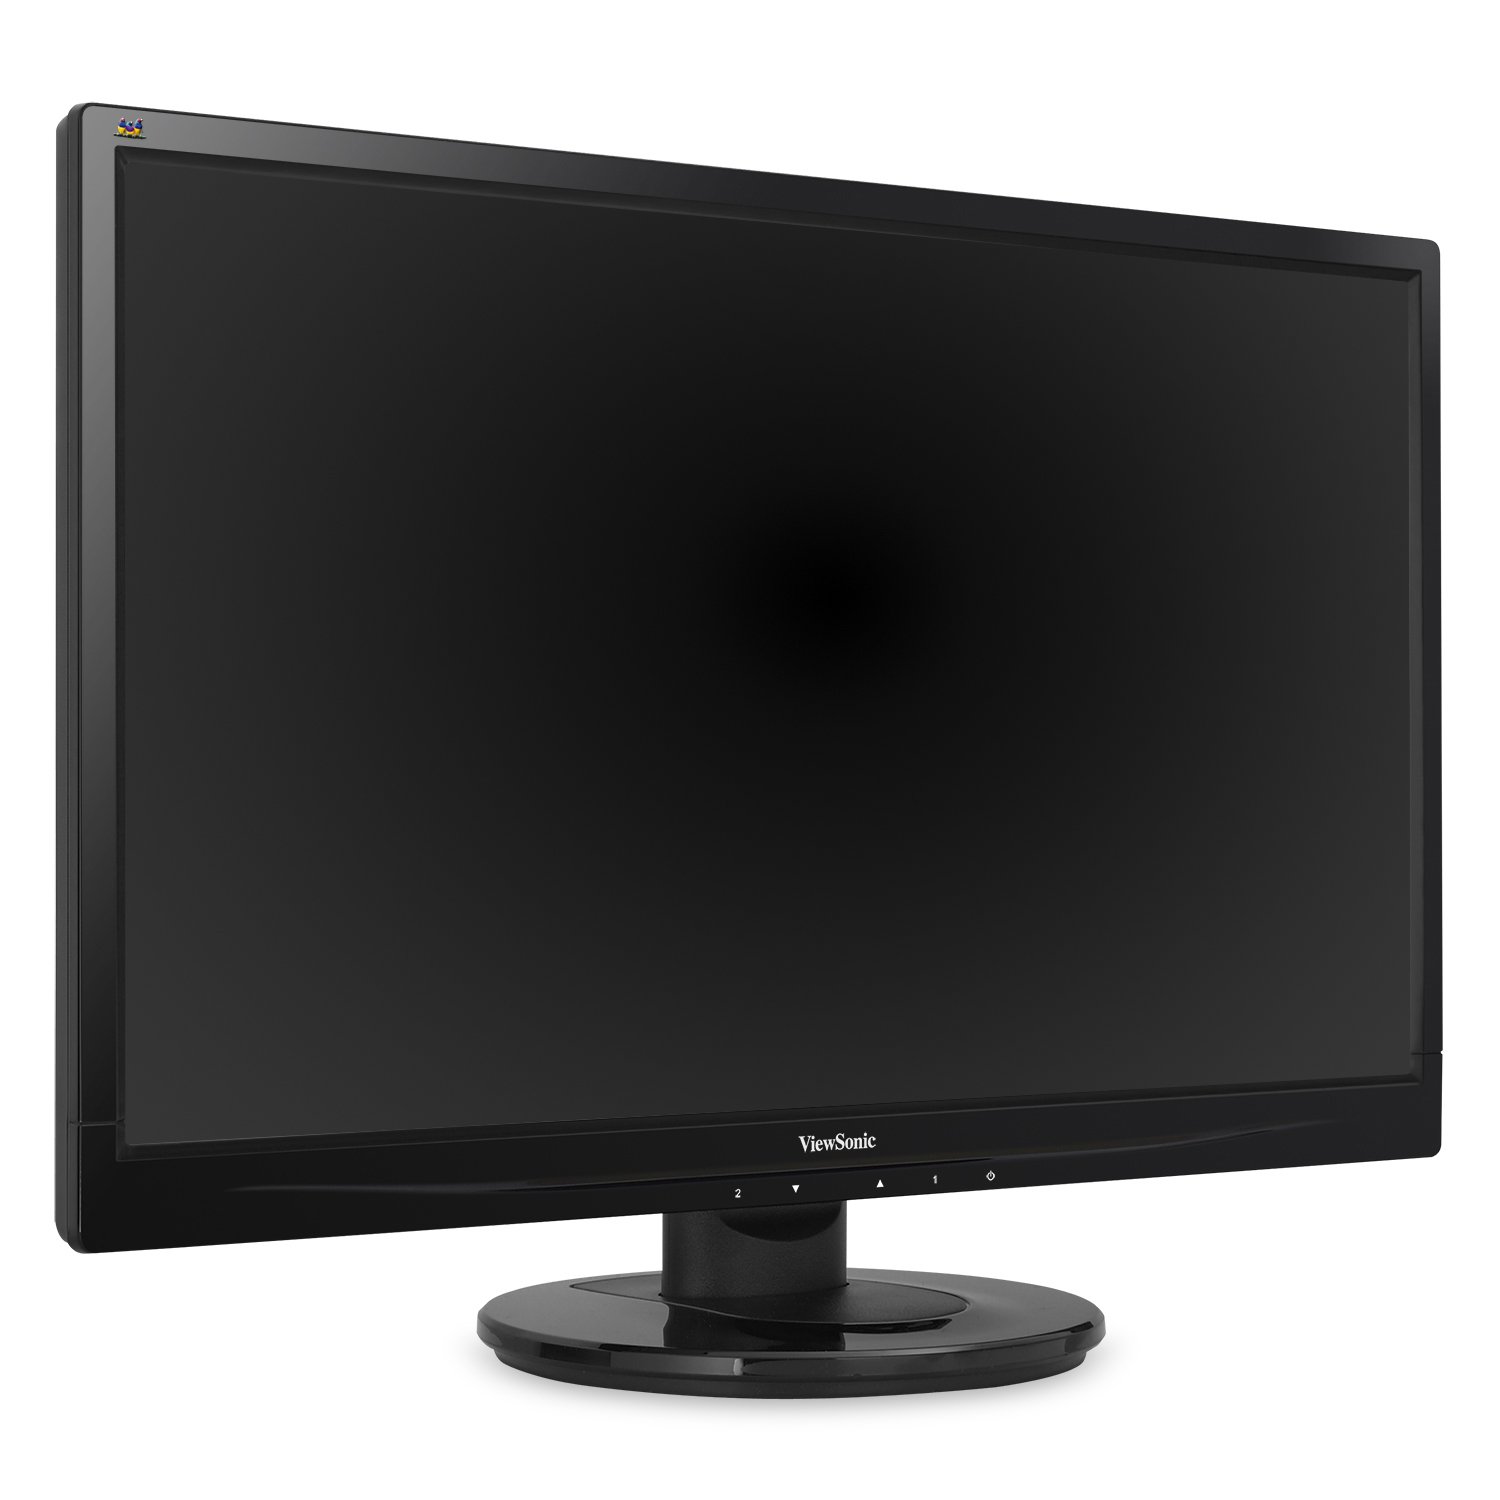 ViewSonic VA2246M-LED 22 Inch Full HD 1080p LED Monitor with DVI and VGA Inputs,Black